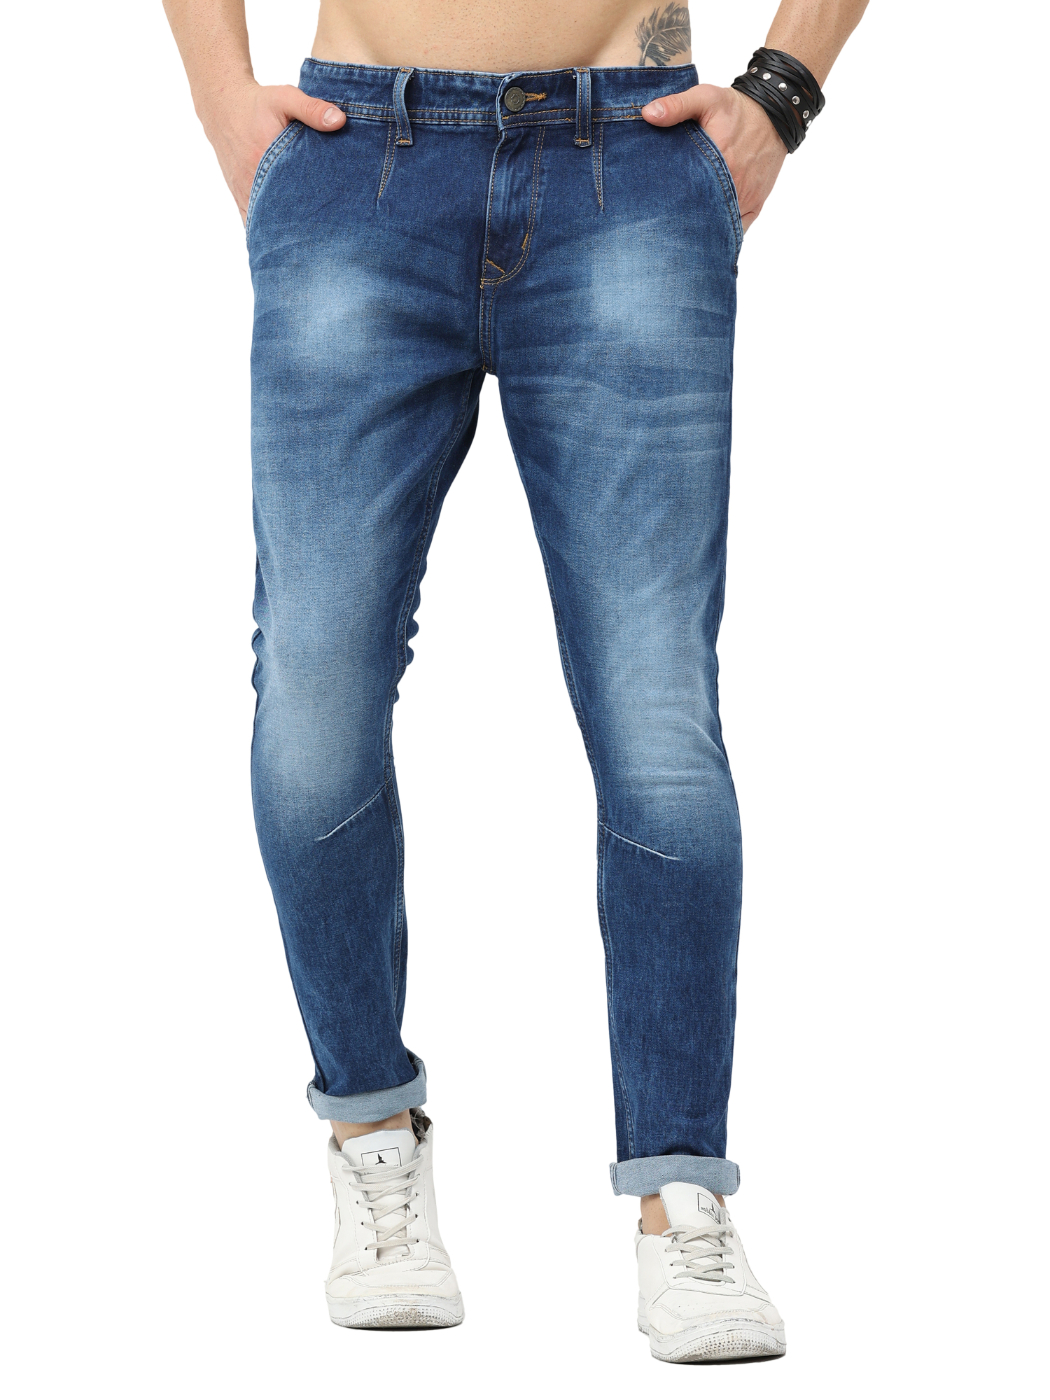 Men Jeans Denim Pants Fit Types Guideline Flat Illustration Stock  Illustration - Download Image Now - iStock